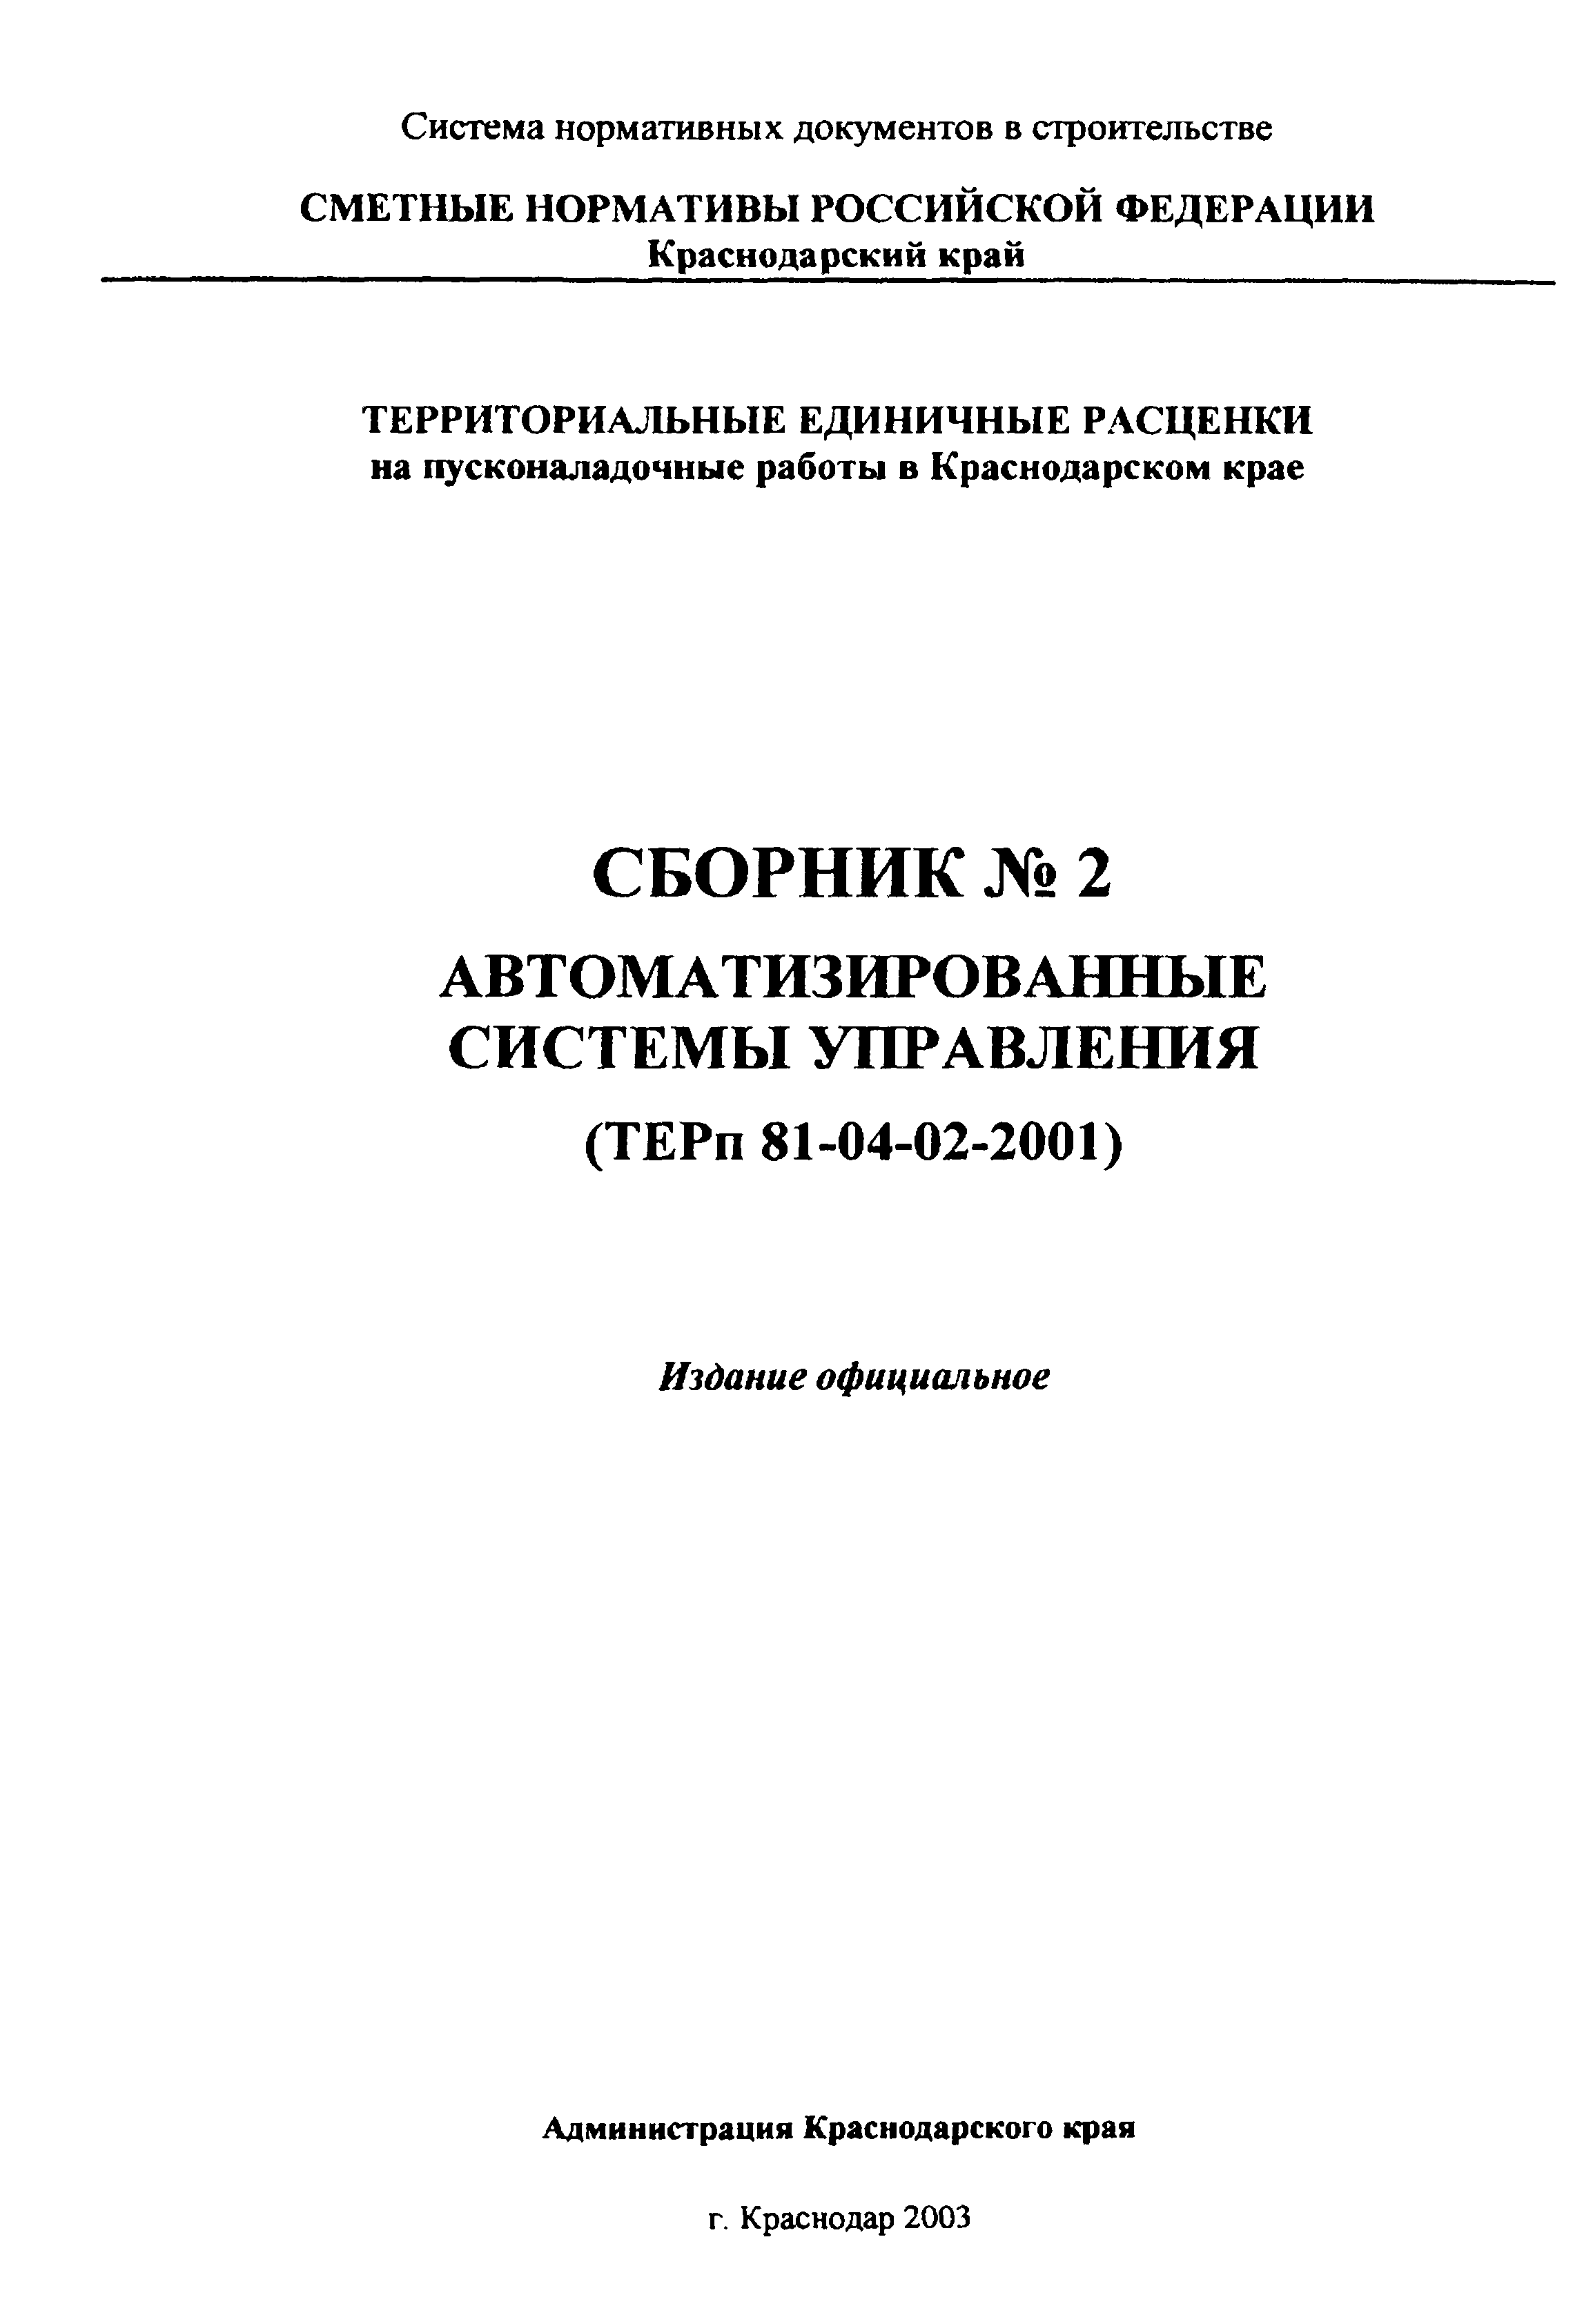 ТЕРп Краснодарского края 2001-02